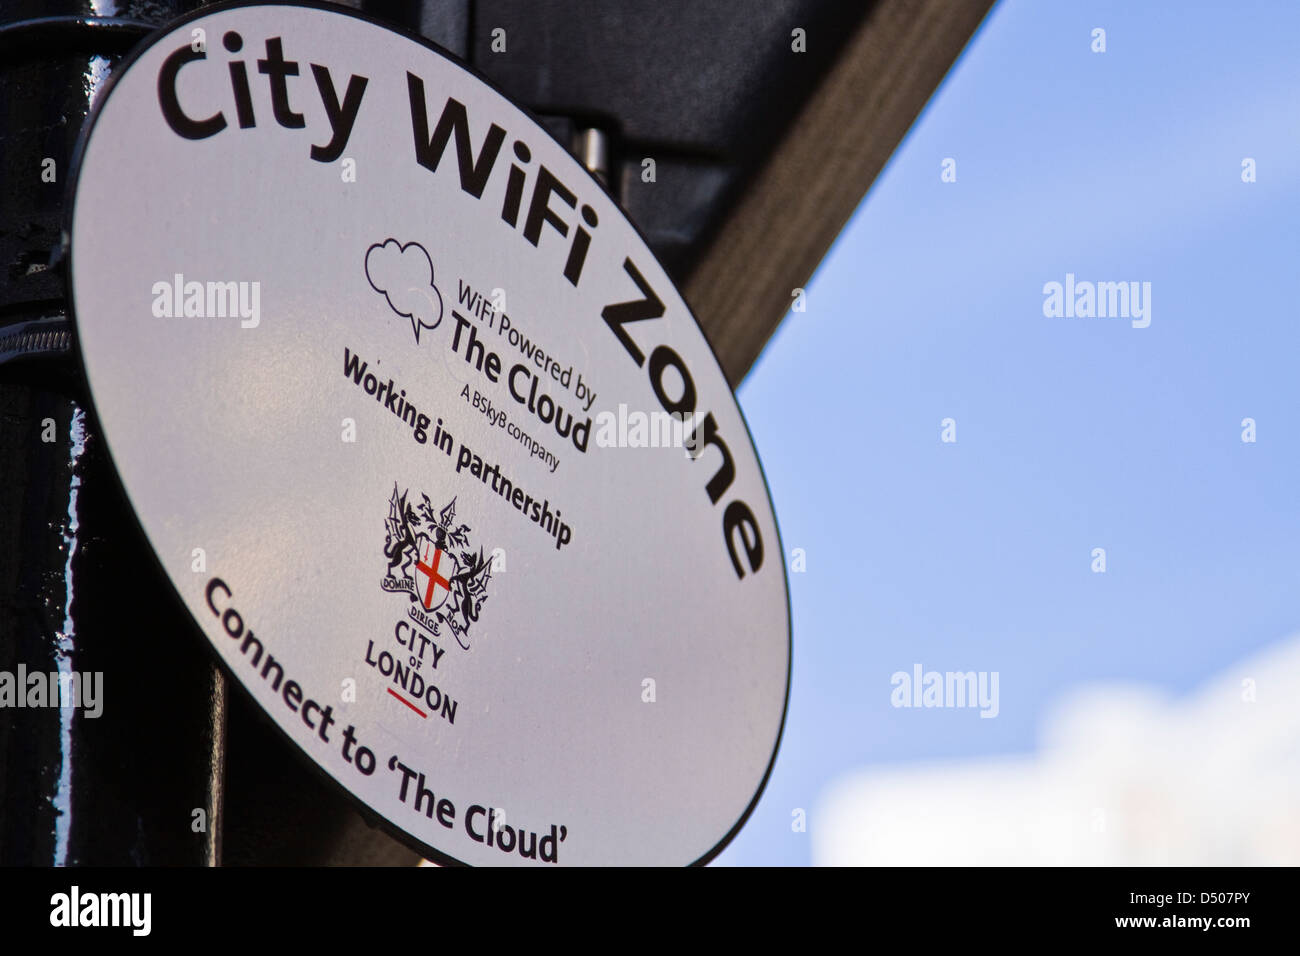 City WiFi zone sign Stock Photo